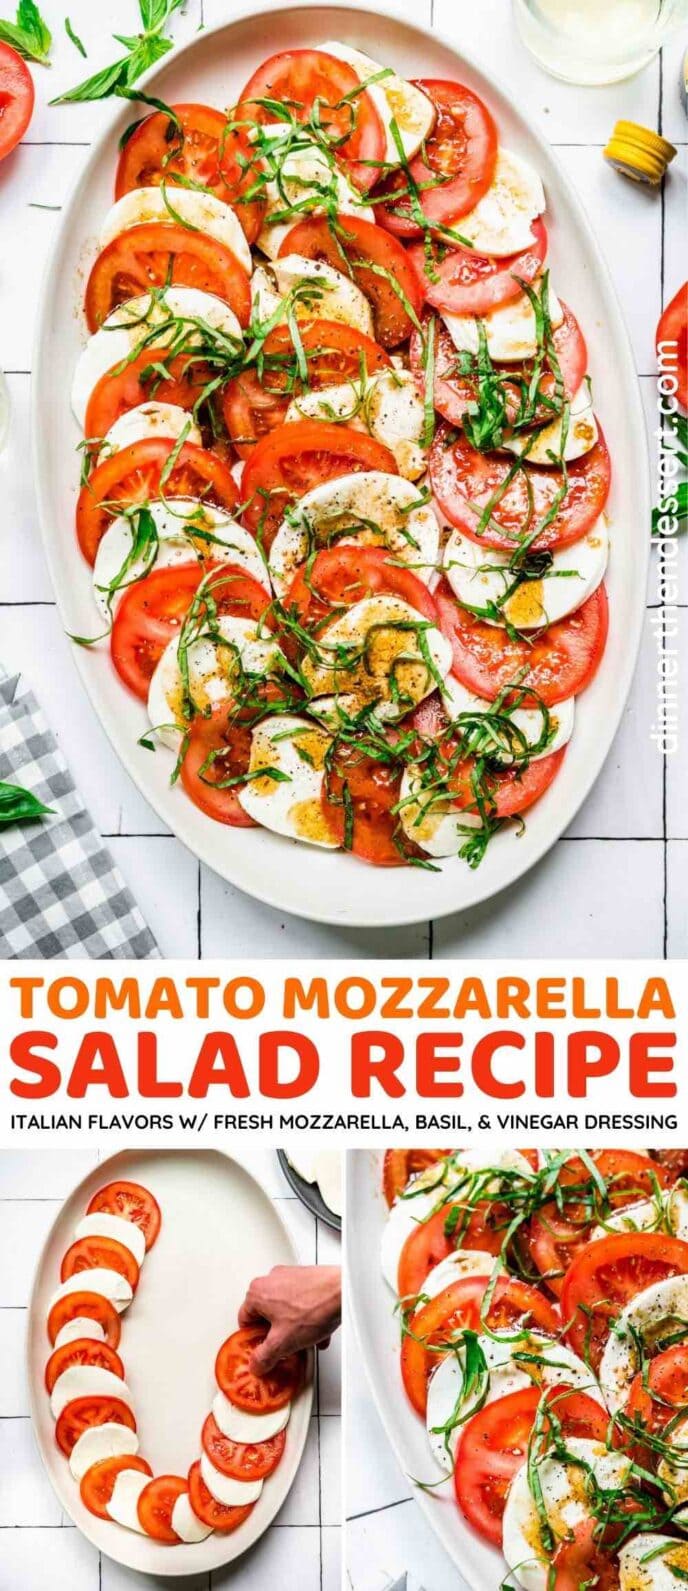 Tomato Mozzarella Salad collage